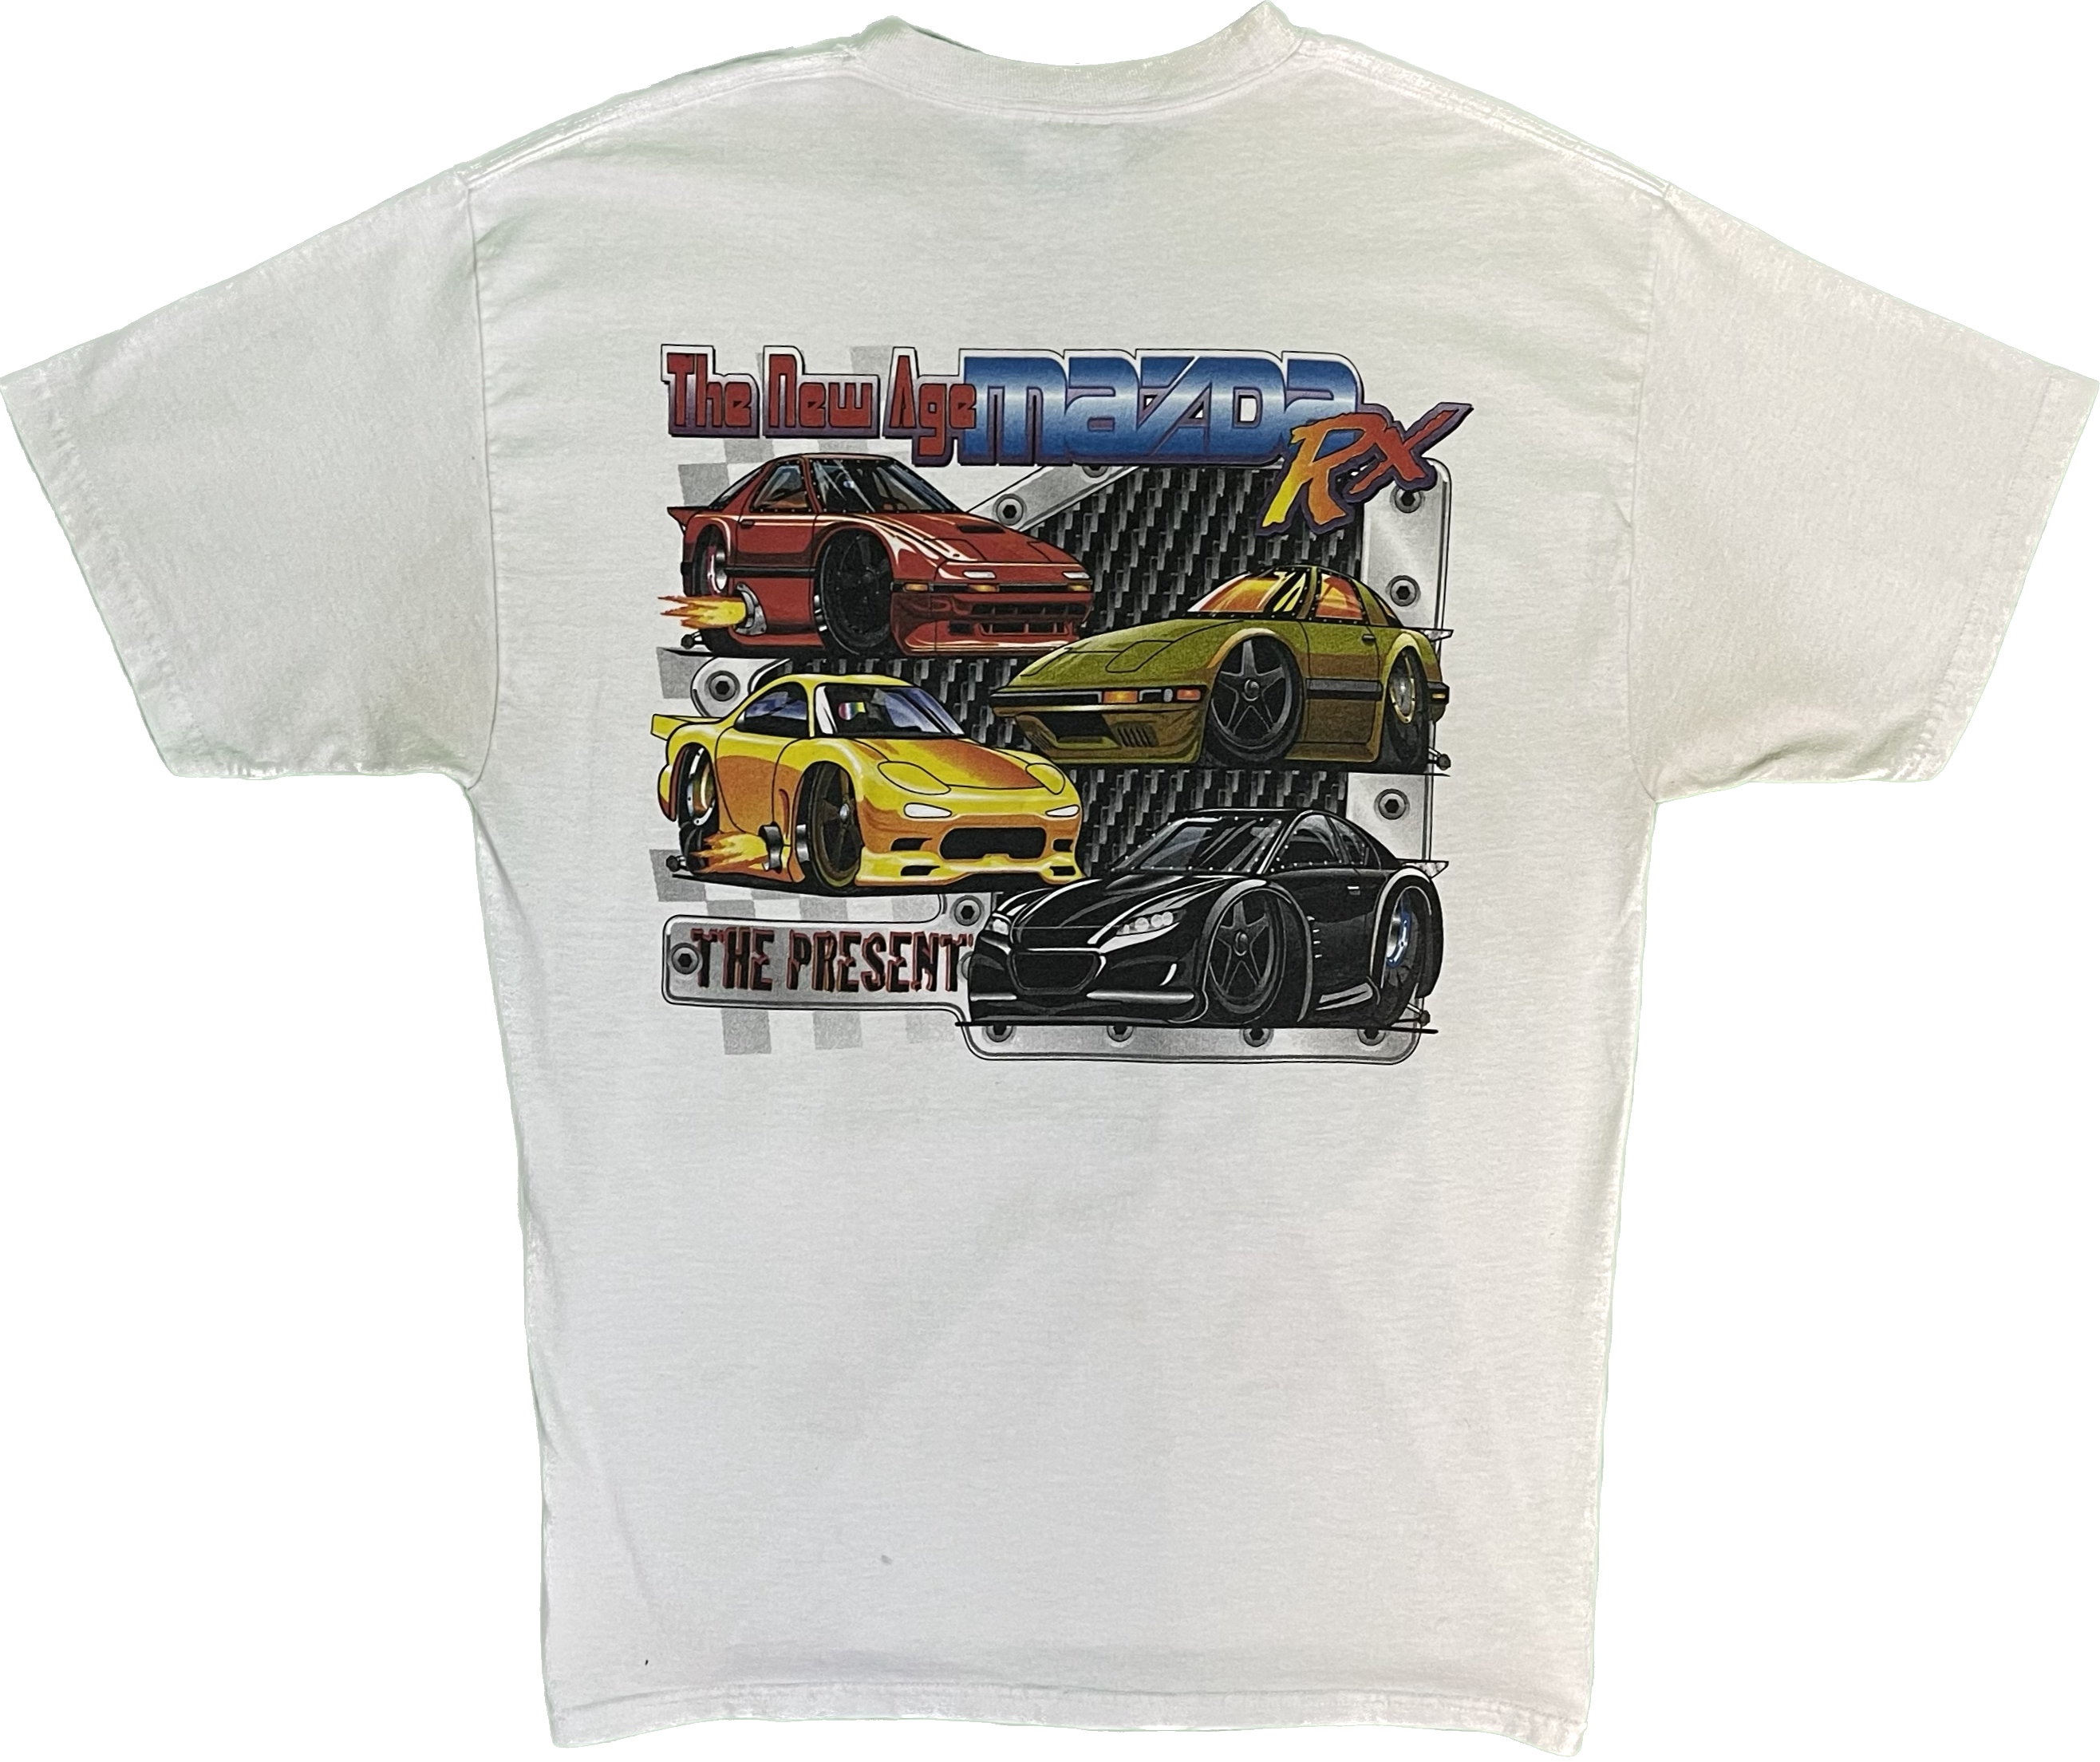 Vintage Car Mazda T-Shirt